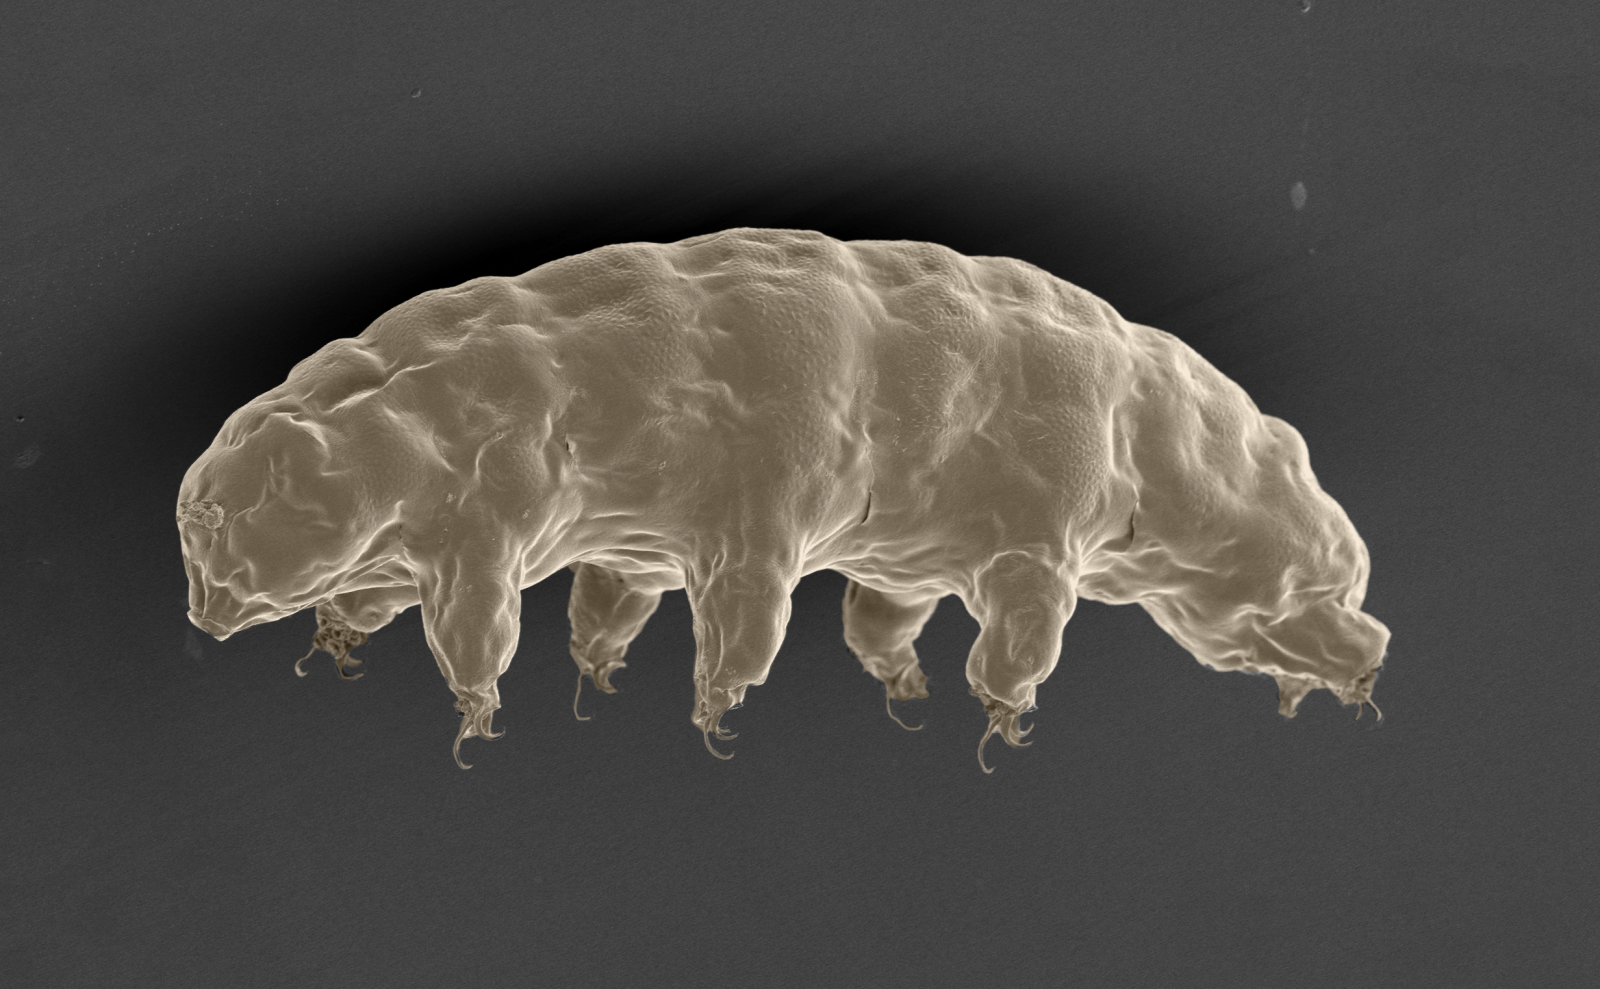 Tardigrades survive harsh environments thanks to unique genes